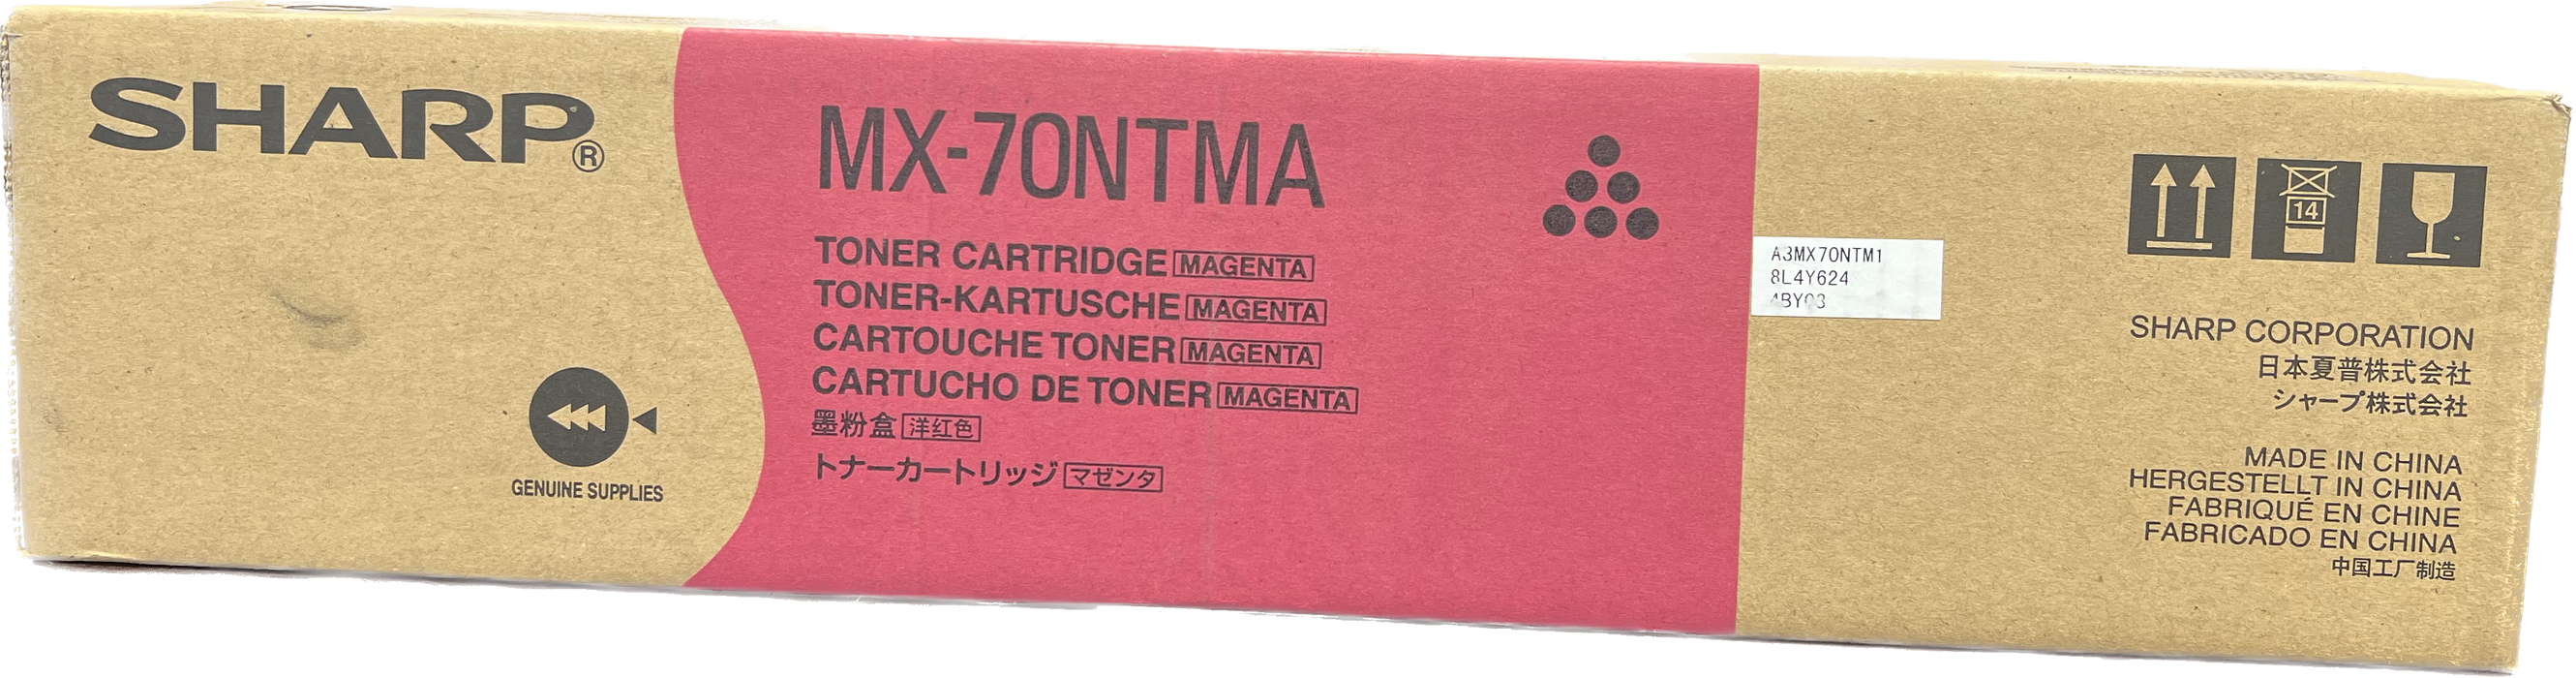 Genuine Sharp Magenta Toner Cartridge | MX-70NTMA